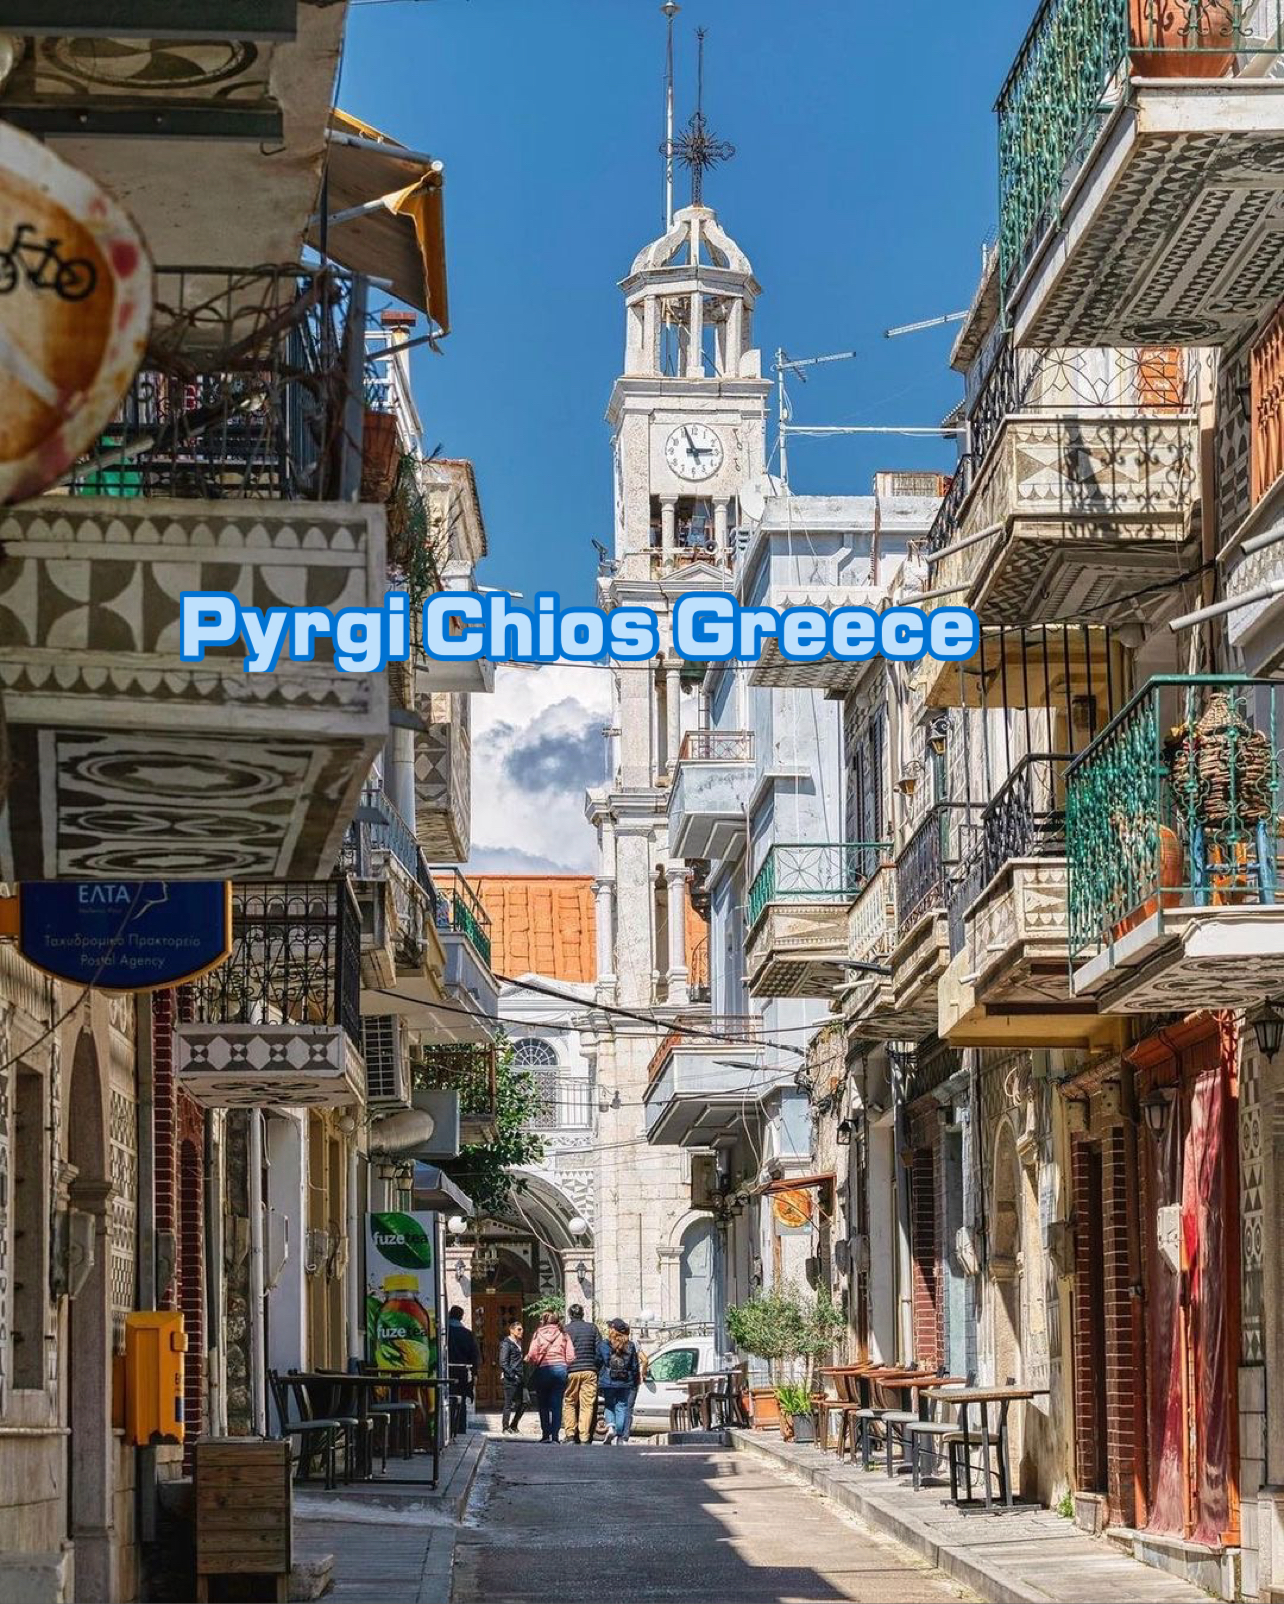 Pyrgi Chios Greece